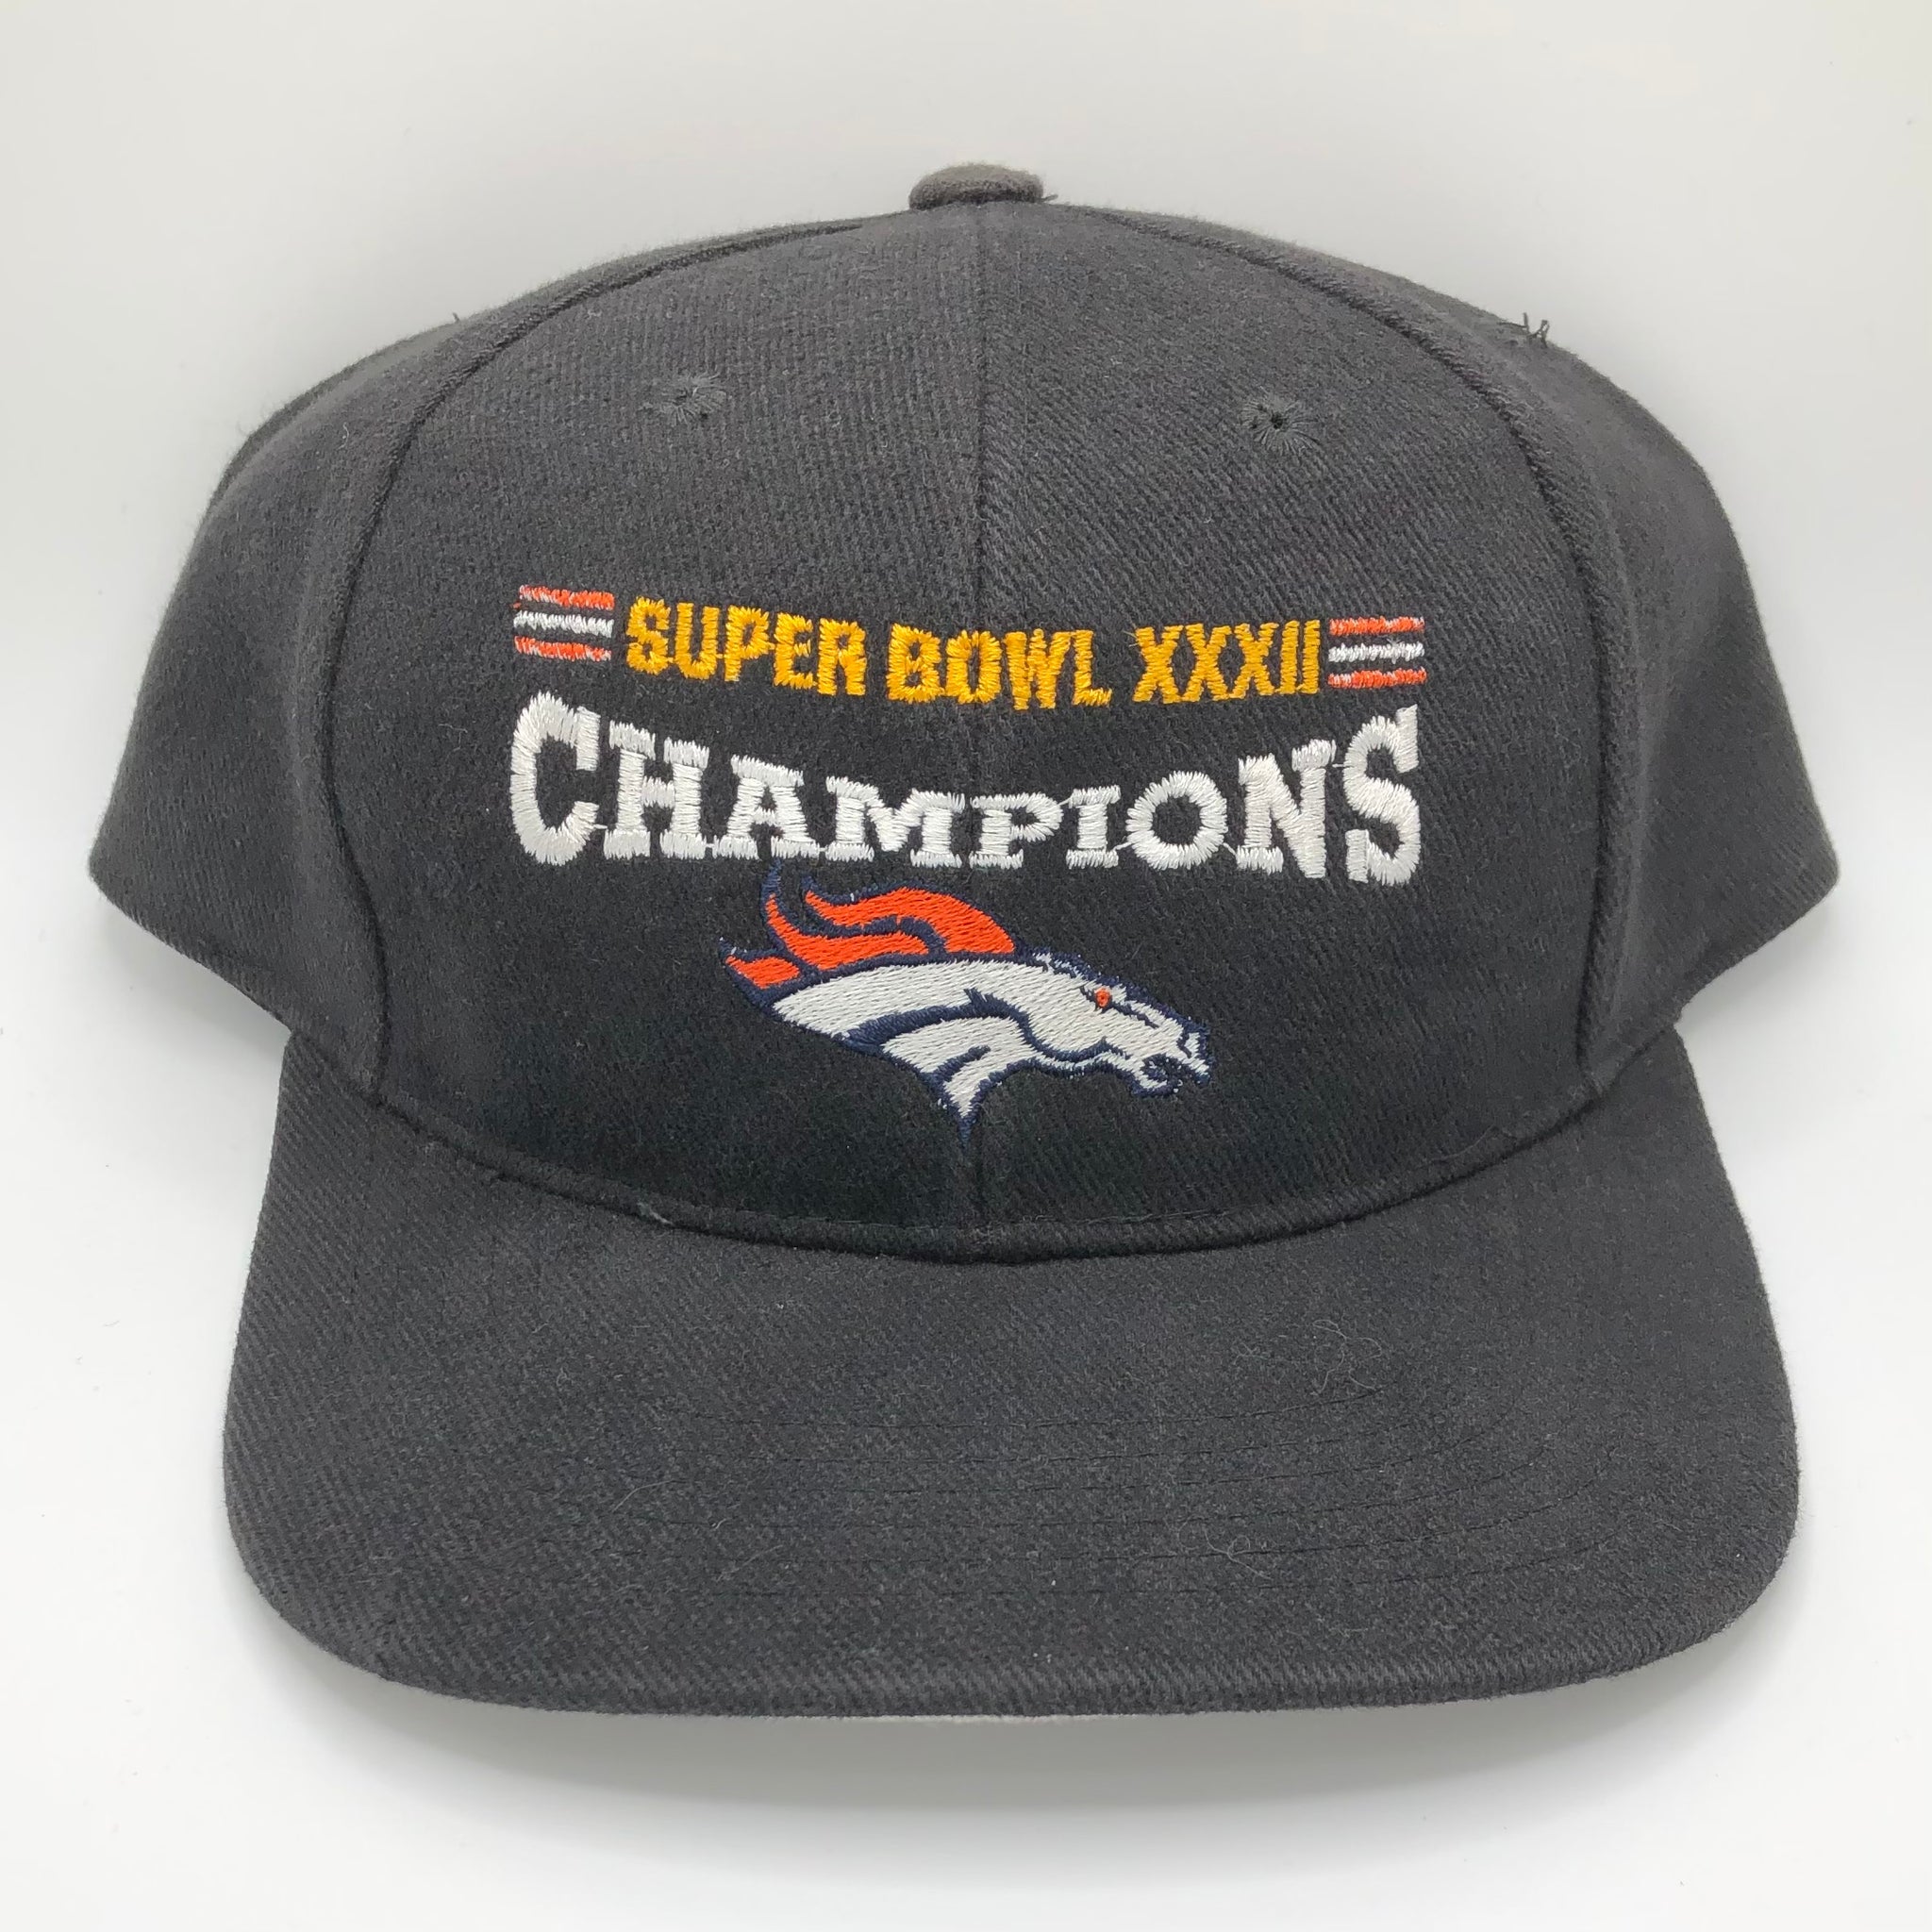 Vintage Denver Broncos Strapback Hat Super Bowl XXXII Champions